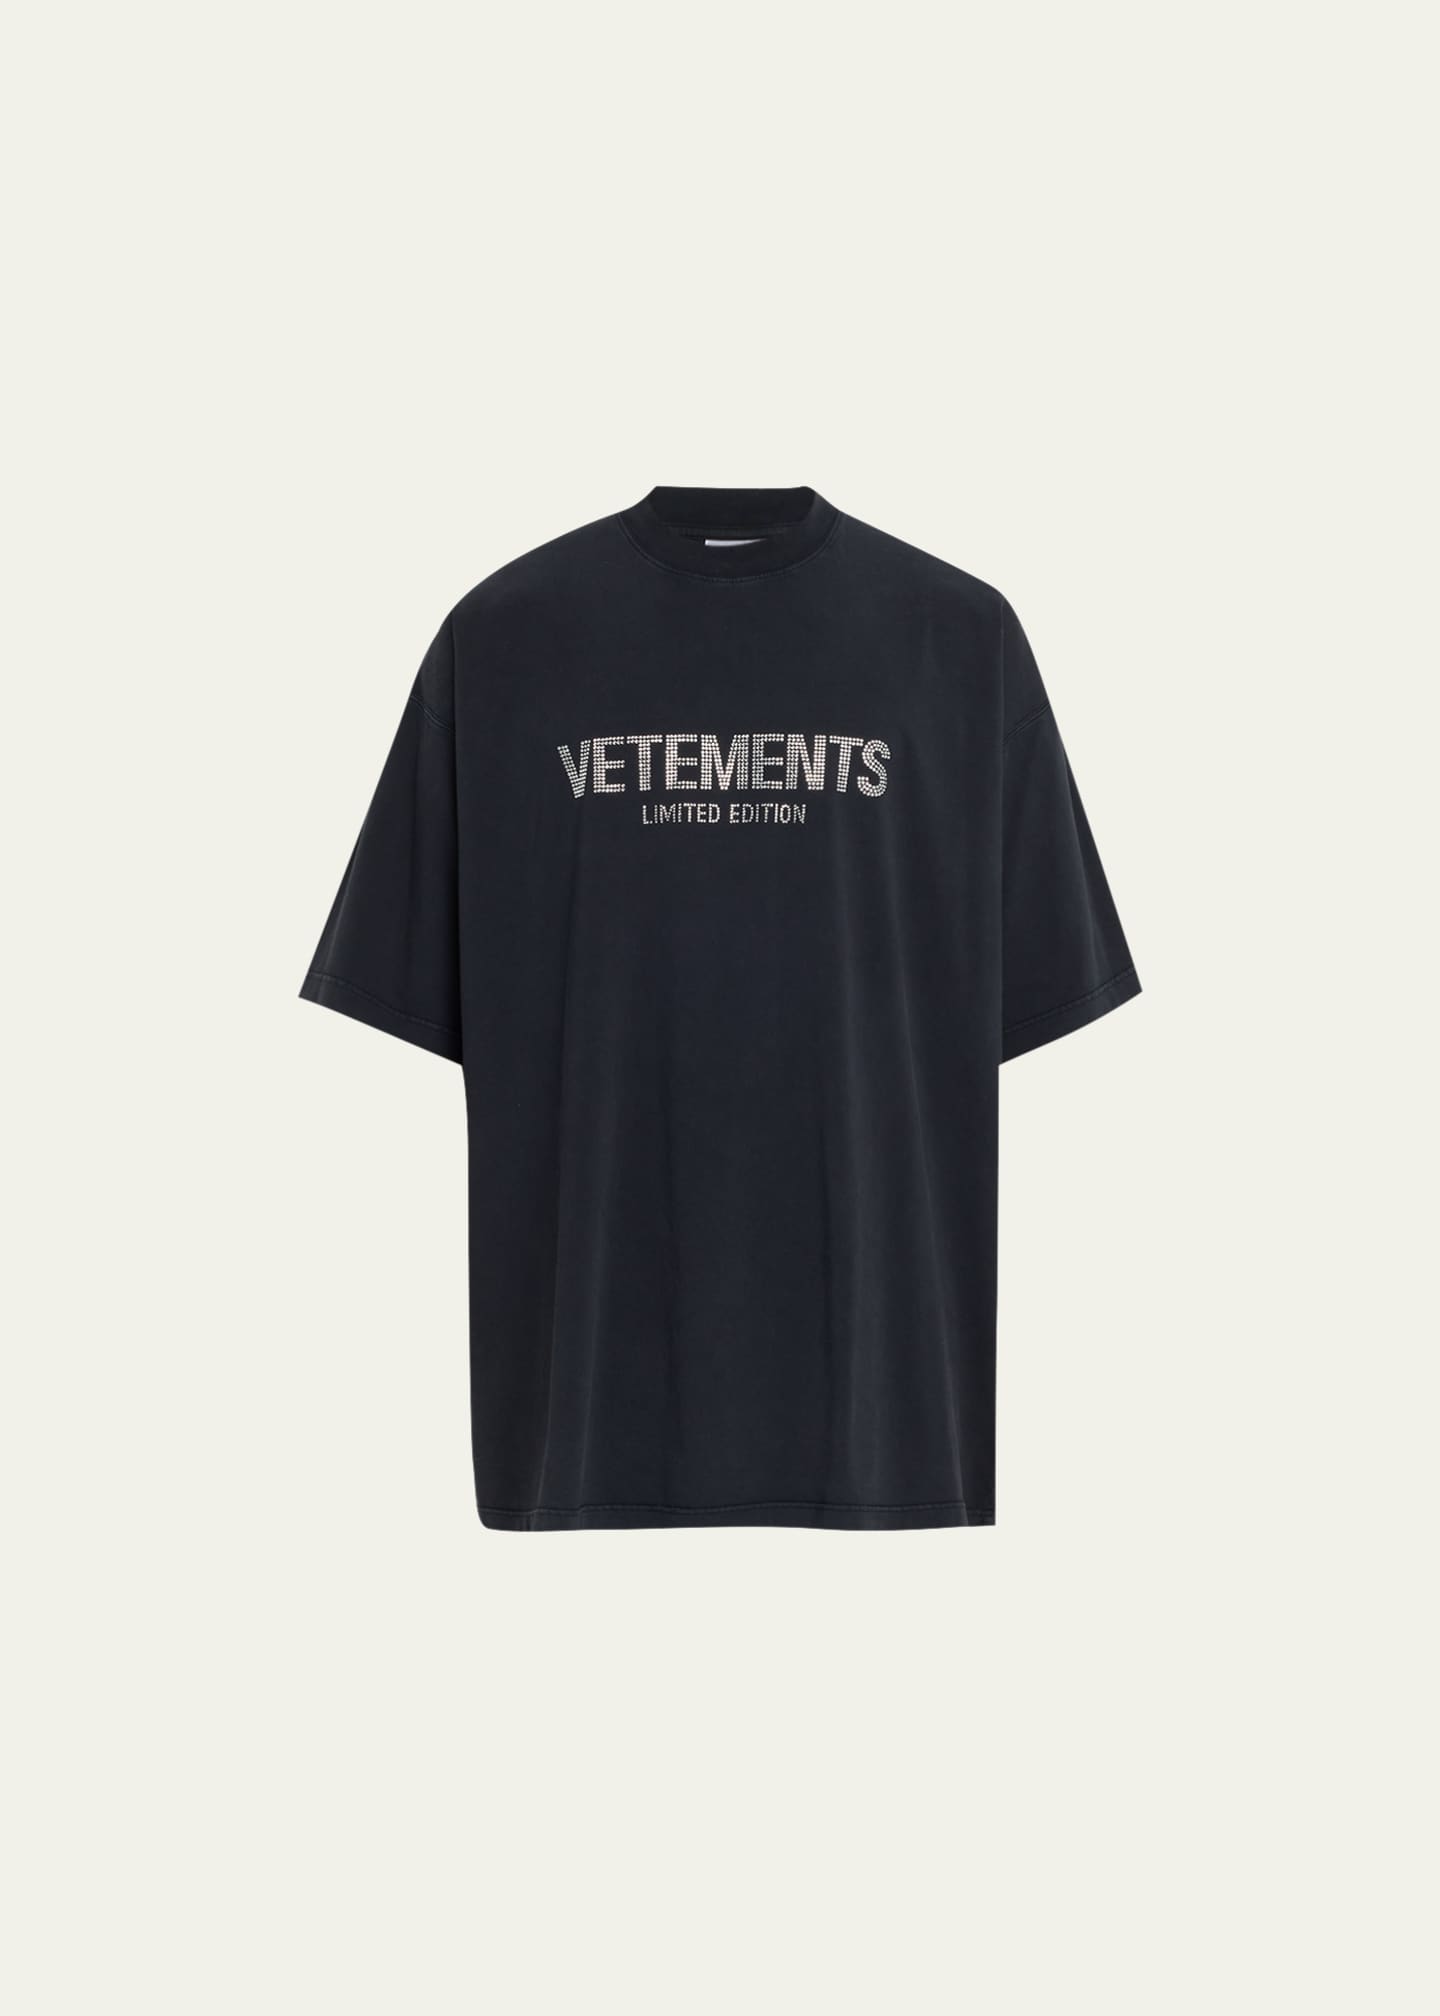 T-shirt men Vetements